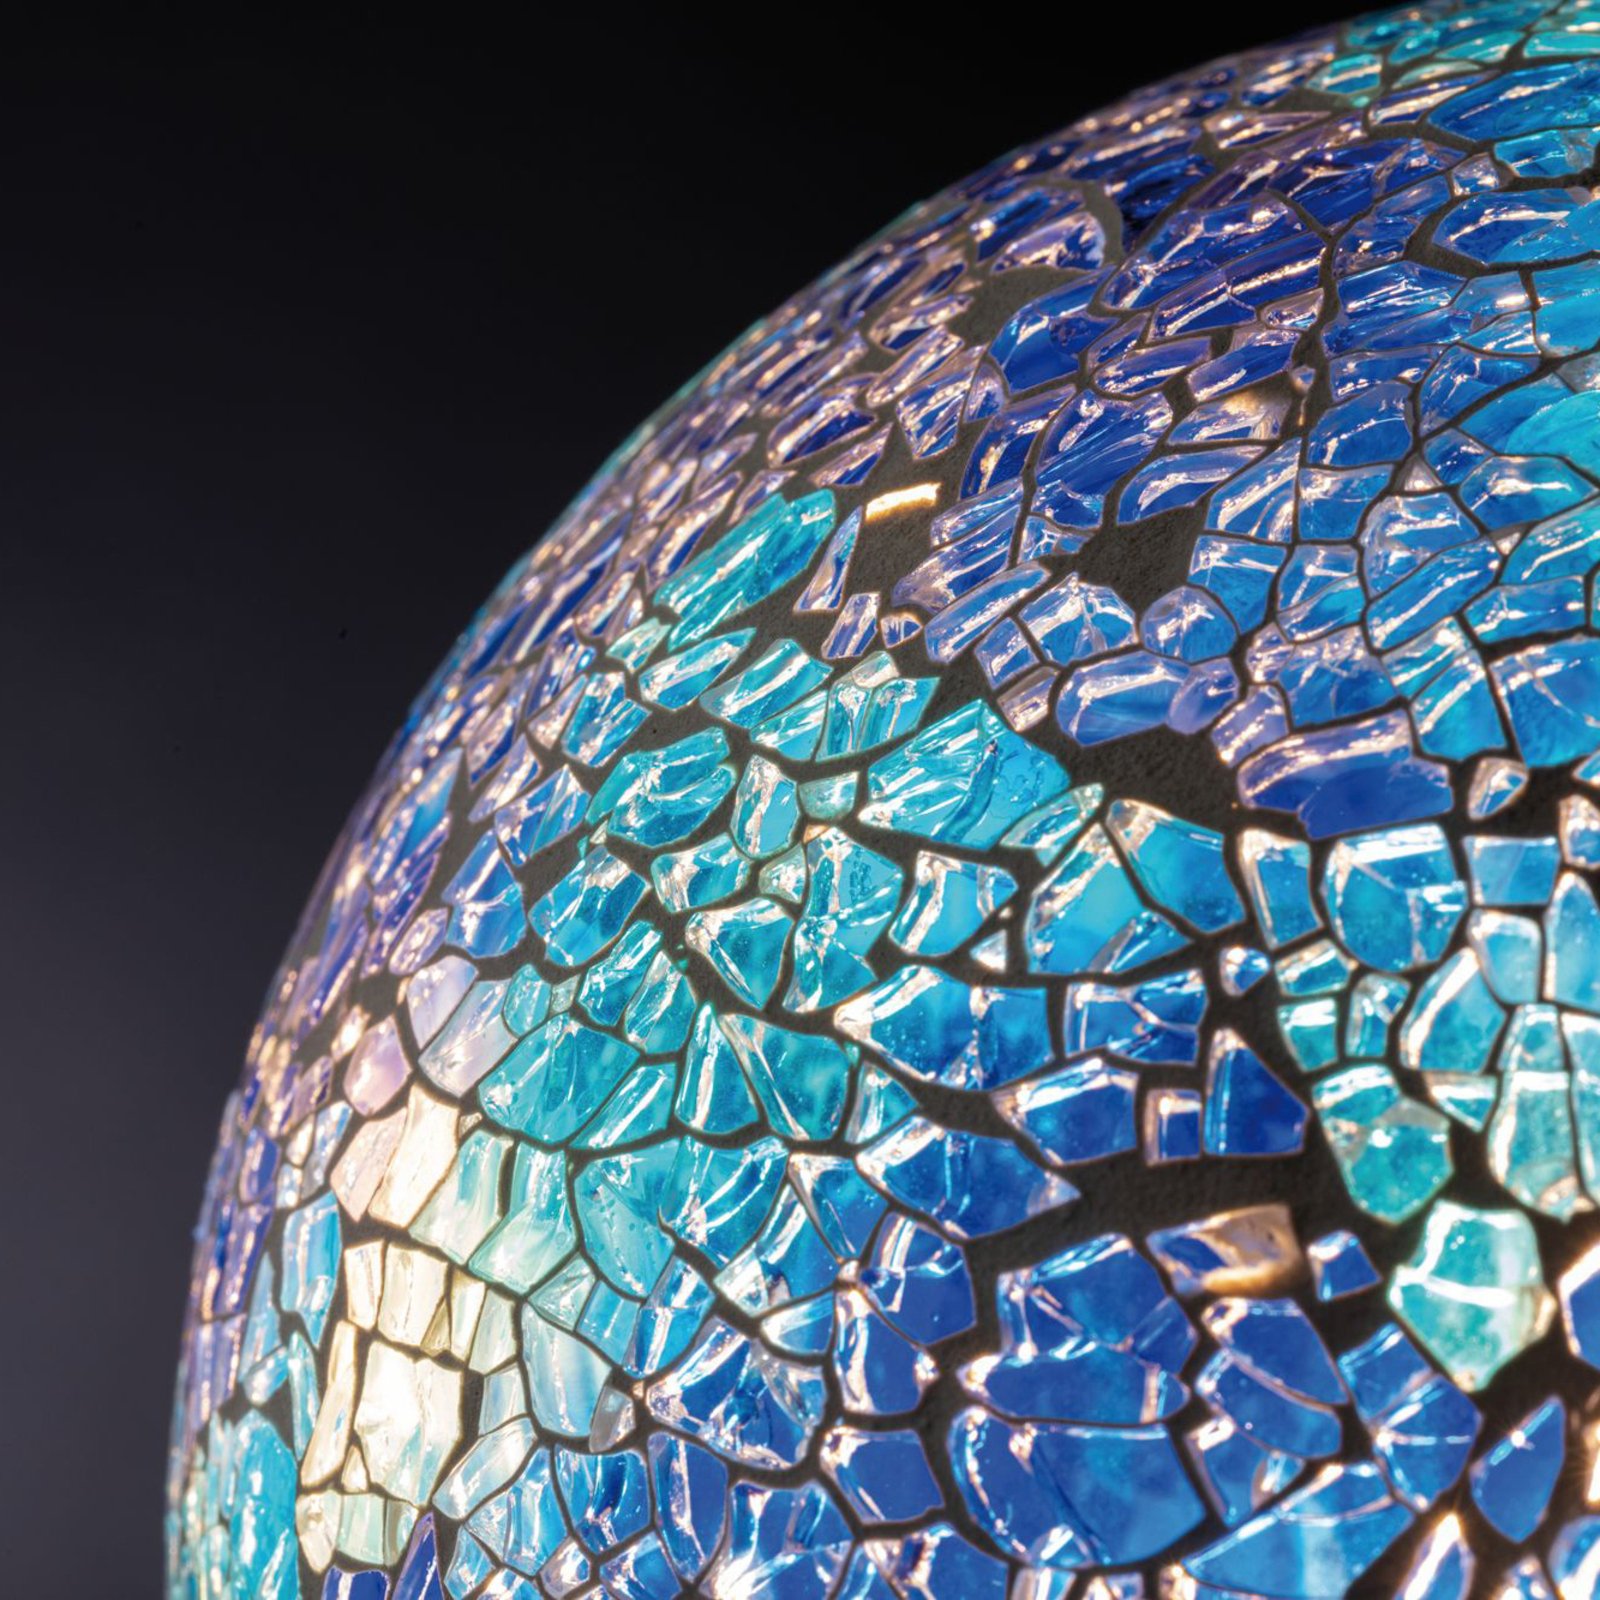 Paulmann E27 LED Globe 5W Miracle Mosaic blauw